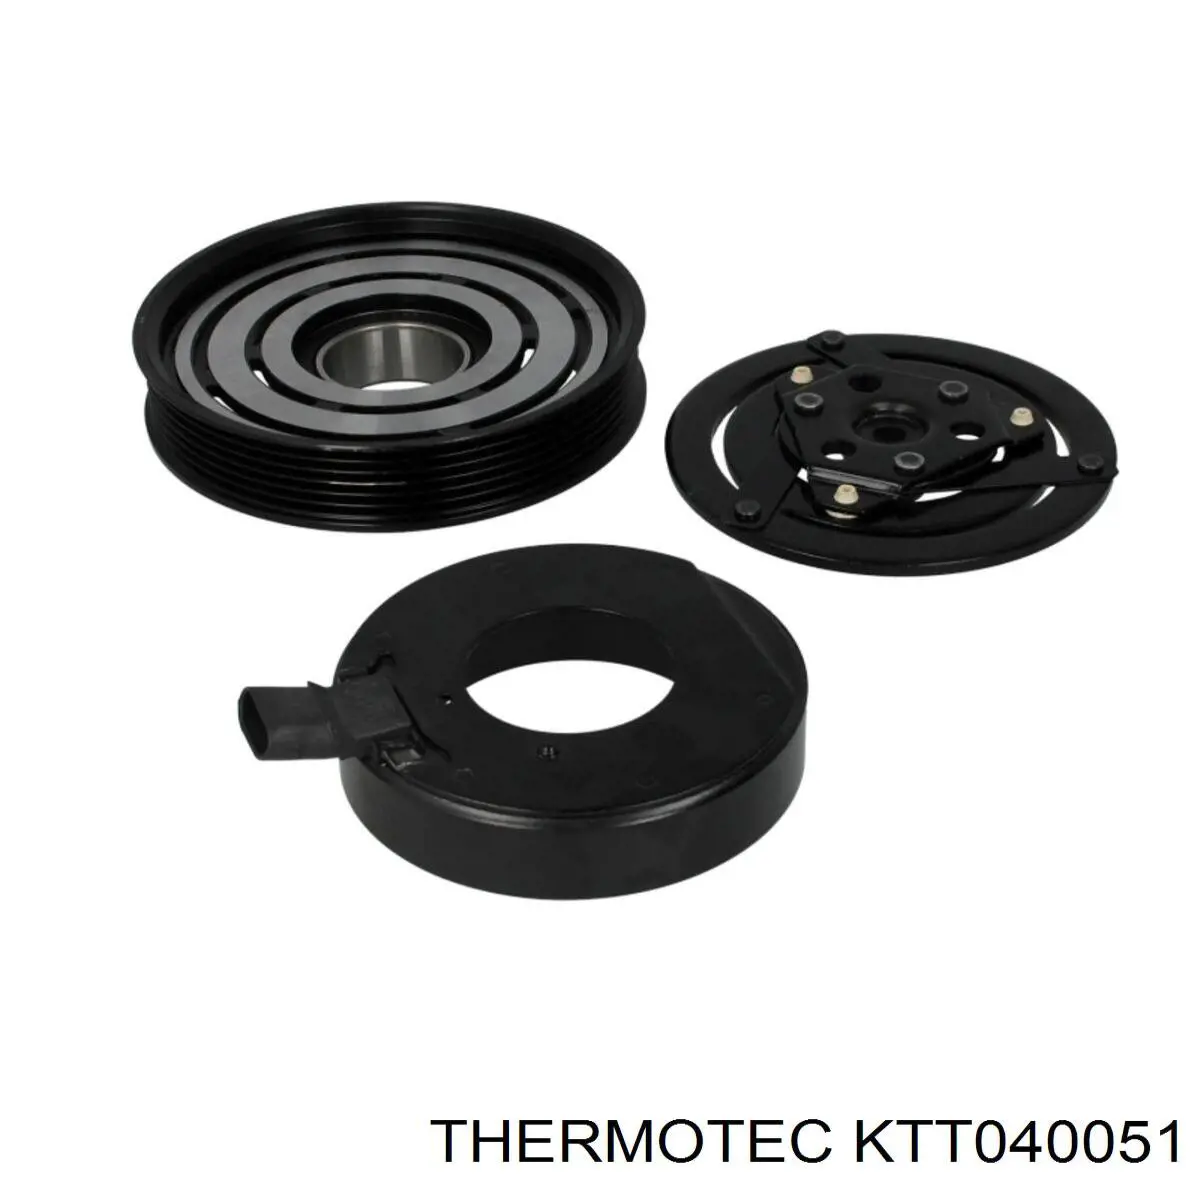 KTT040051 Thermotec polea compresor a/c